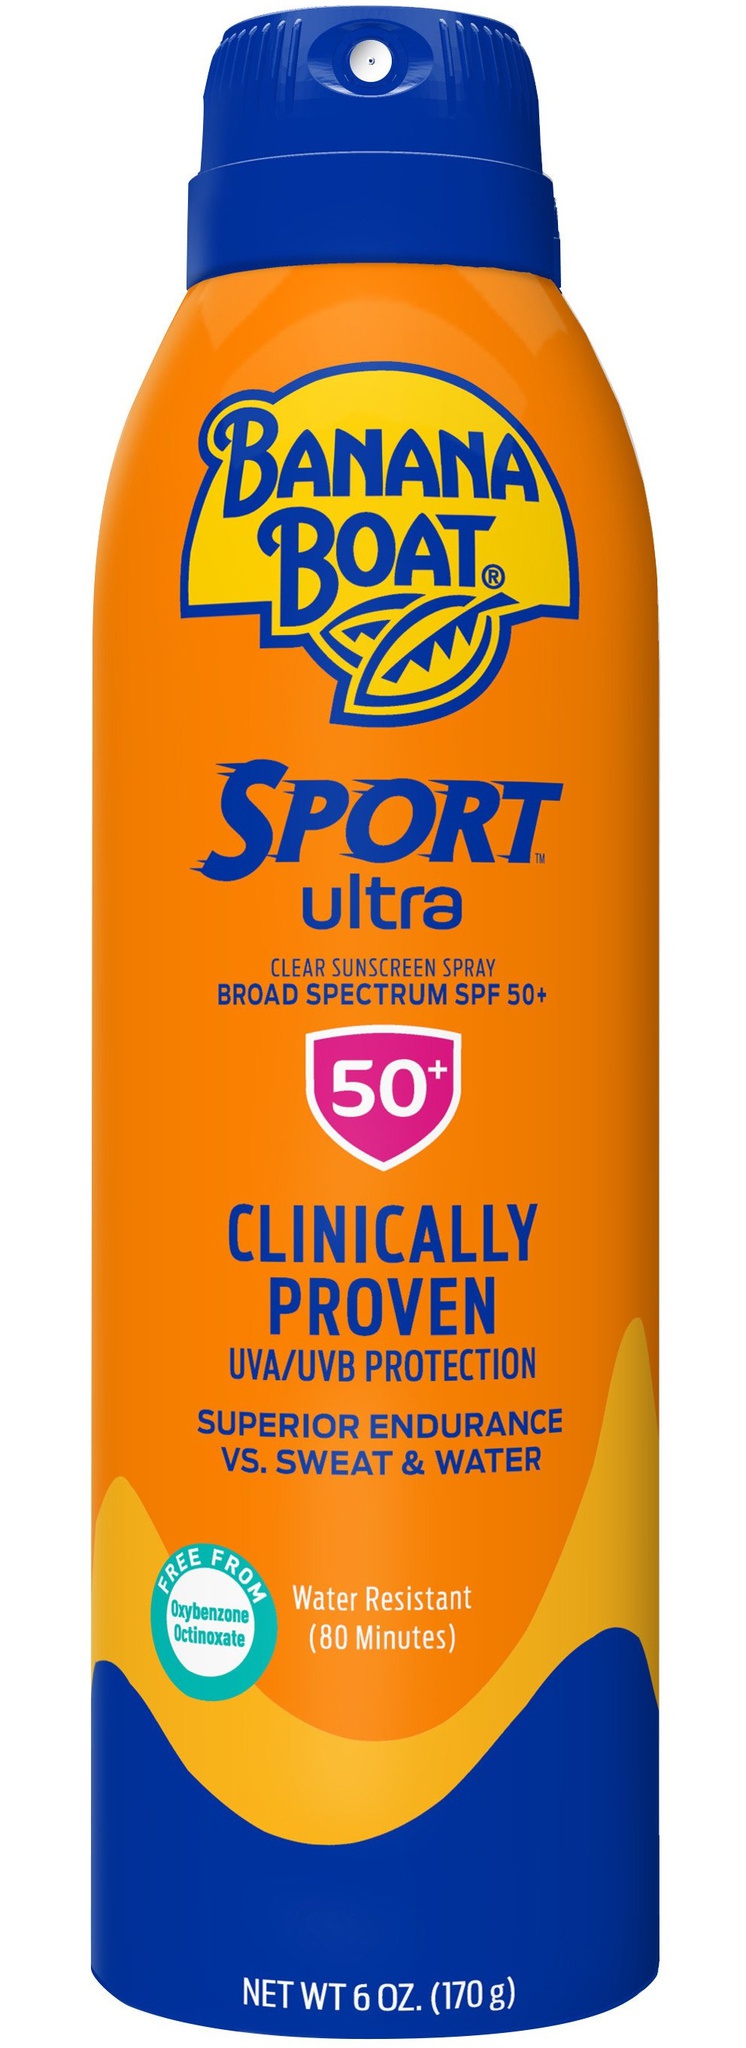 Banana Boat Sport Ultra Broad Spectrum SPF 50+ Clear Sunscreen Spray